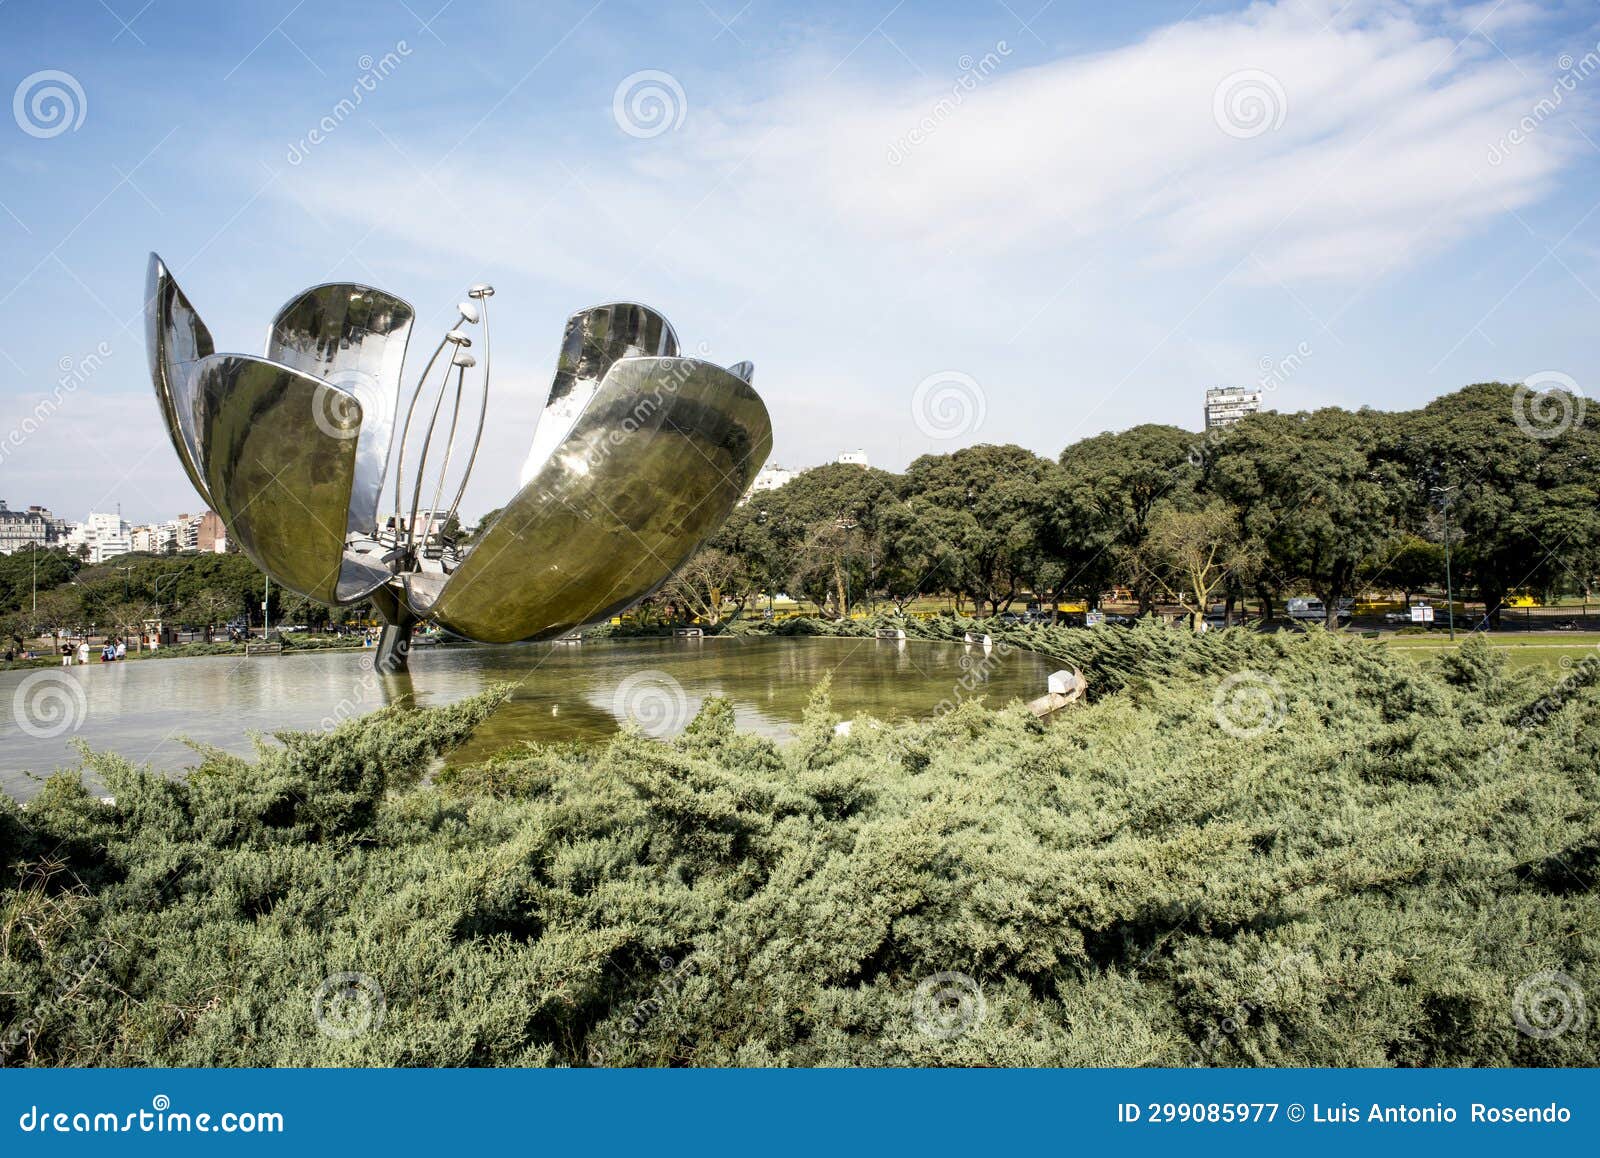 buenos aires argentina floralis generica is a sculpture made of steel and aluminum located in plaza de las naciones